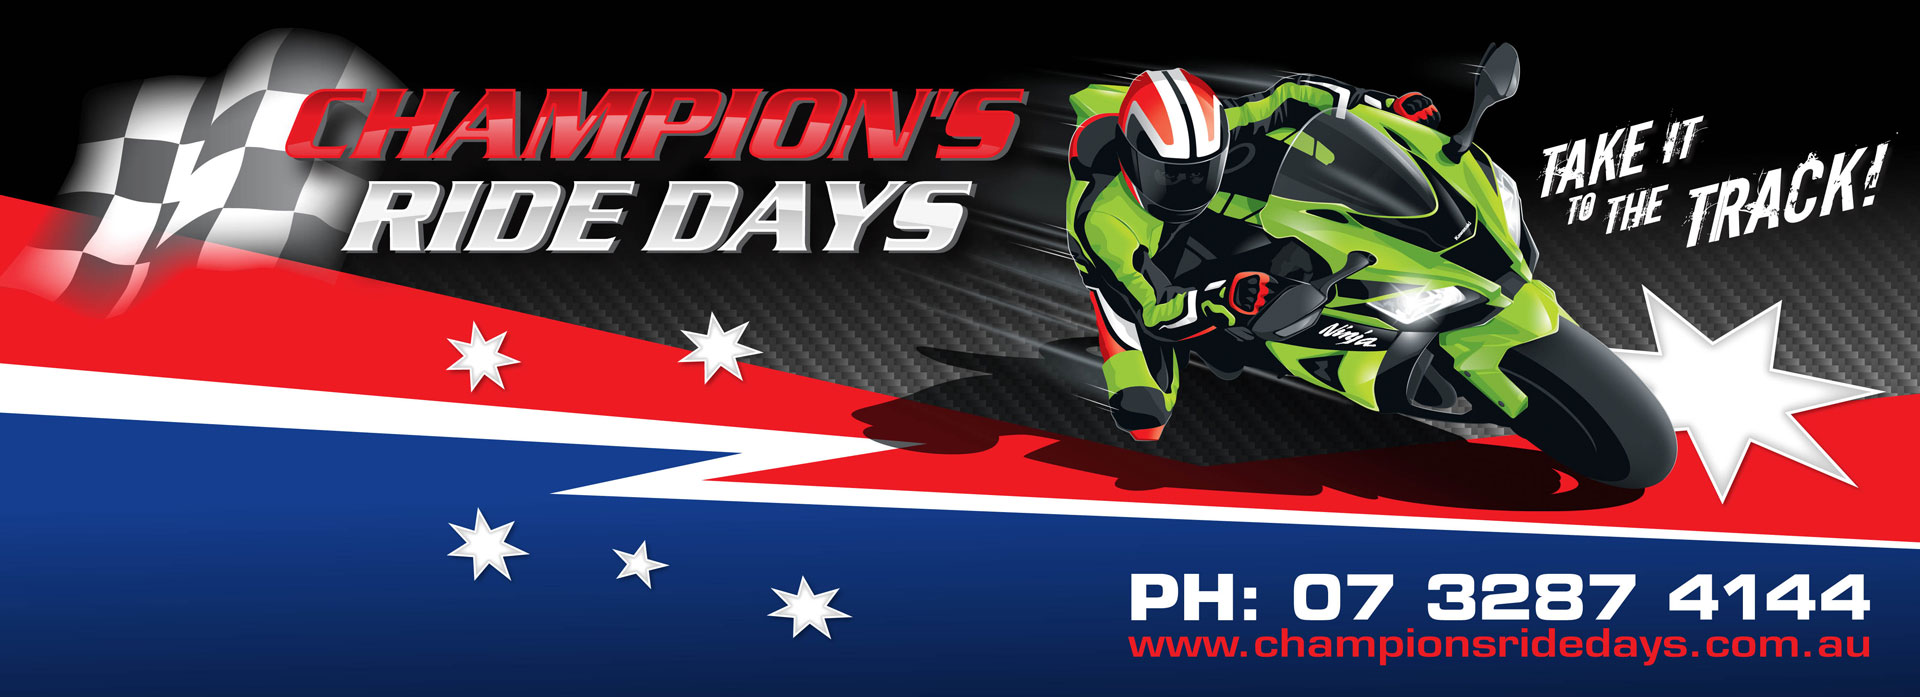 Kawasaki's Team Green Australia Ride Days are managed by Champion's Ride Days